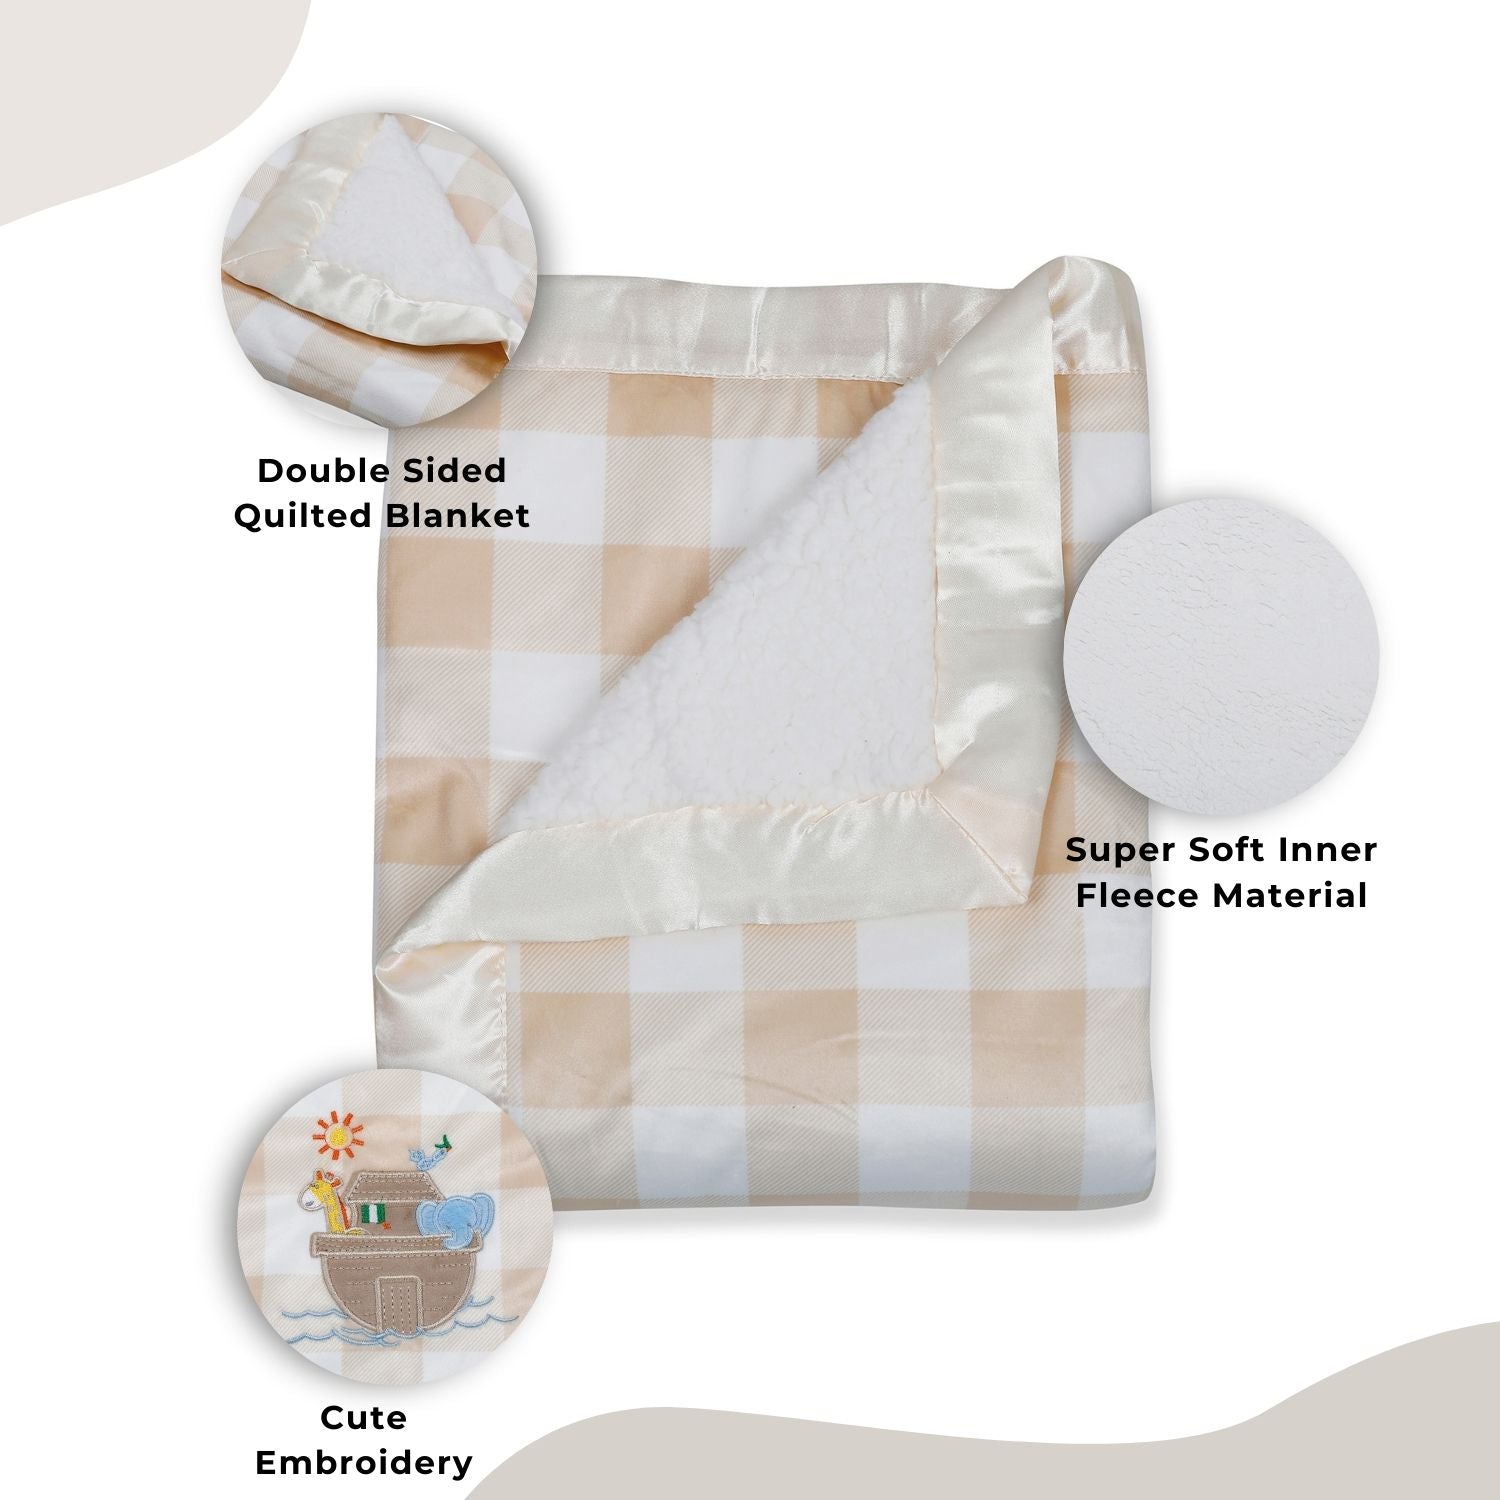 Baby Moo Checkered Charm Soft Fur Blanket - Cream